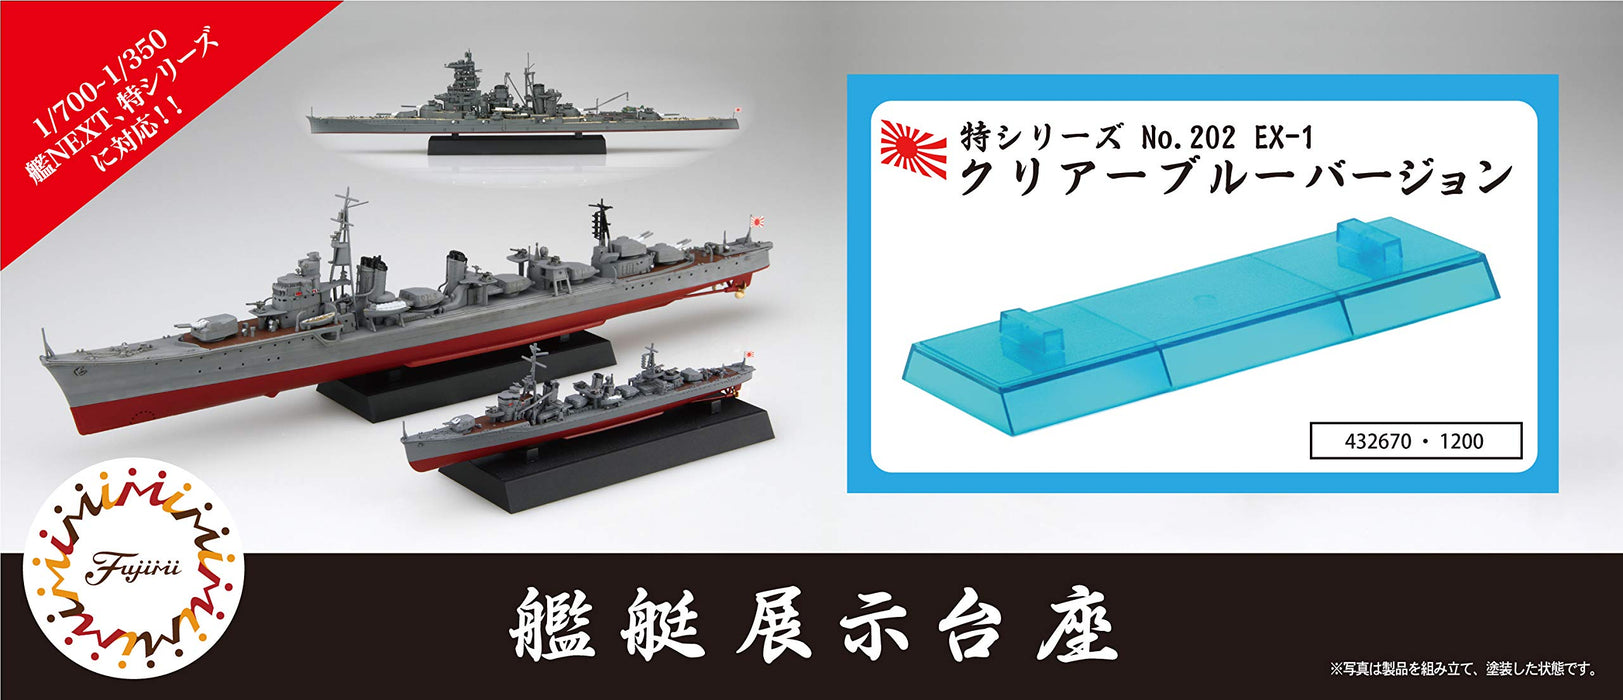 FUJIMI Toku 202 Ex-1 Warship Display Base Clear Blue Ver für Maßstab 1/700 oder 1/350